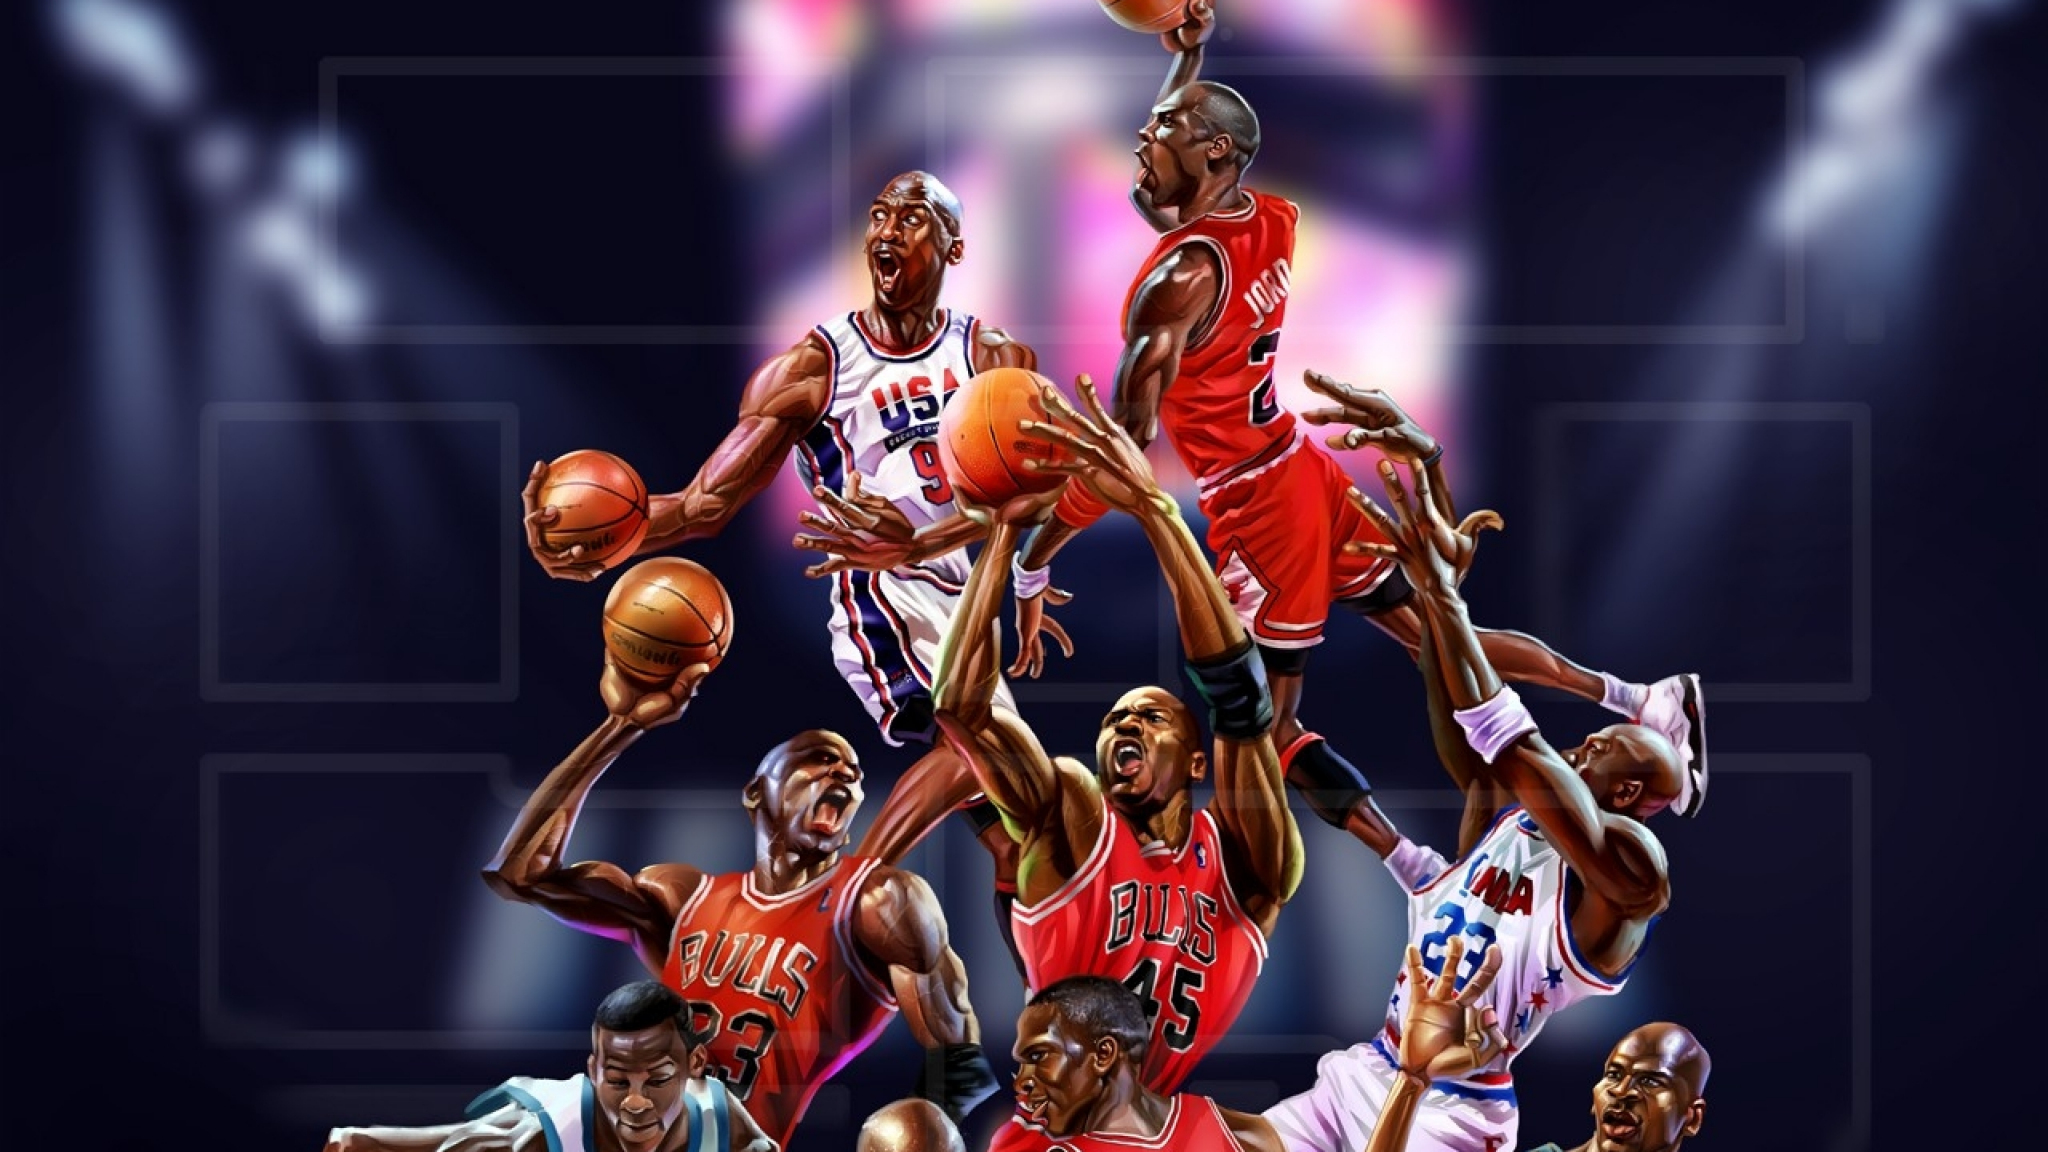 Desktop Wallpapers Nba, Basketball, Sports, Players, Art, Hd Image, Picture...